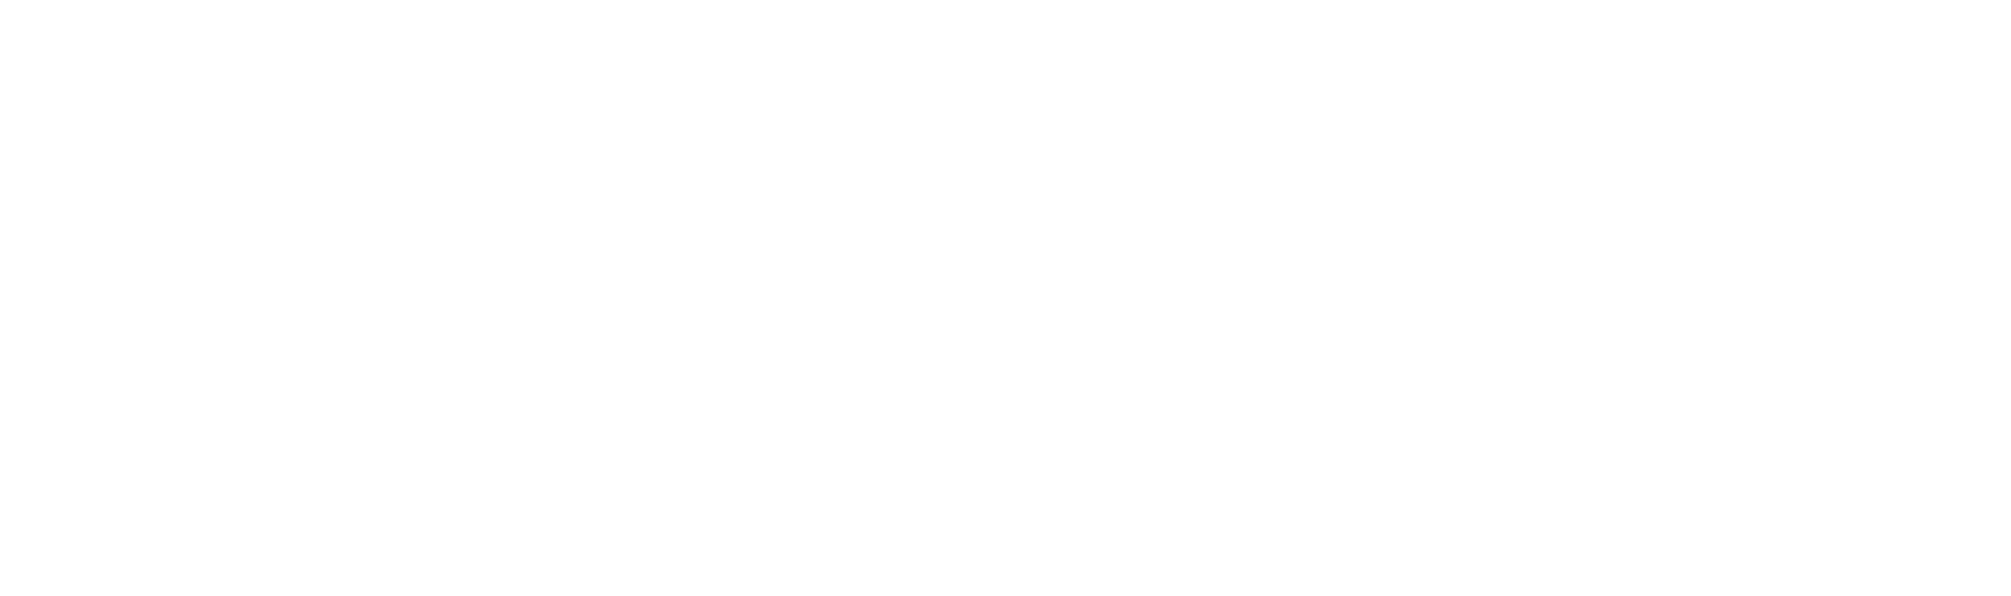 Juan F. Luis Hospital